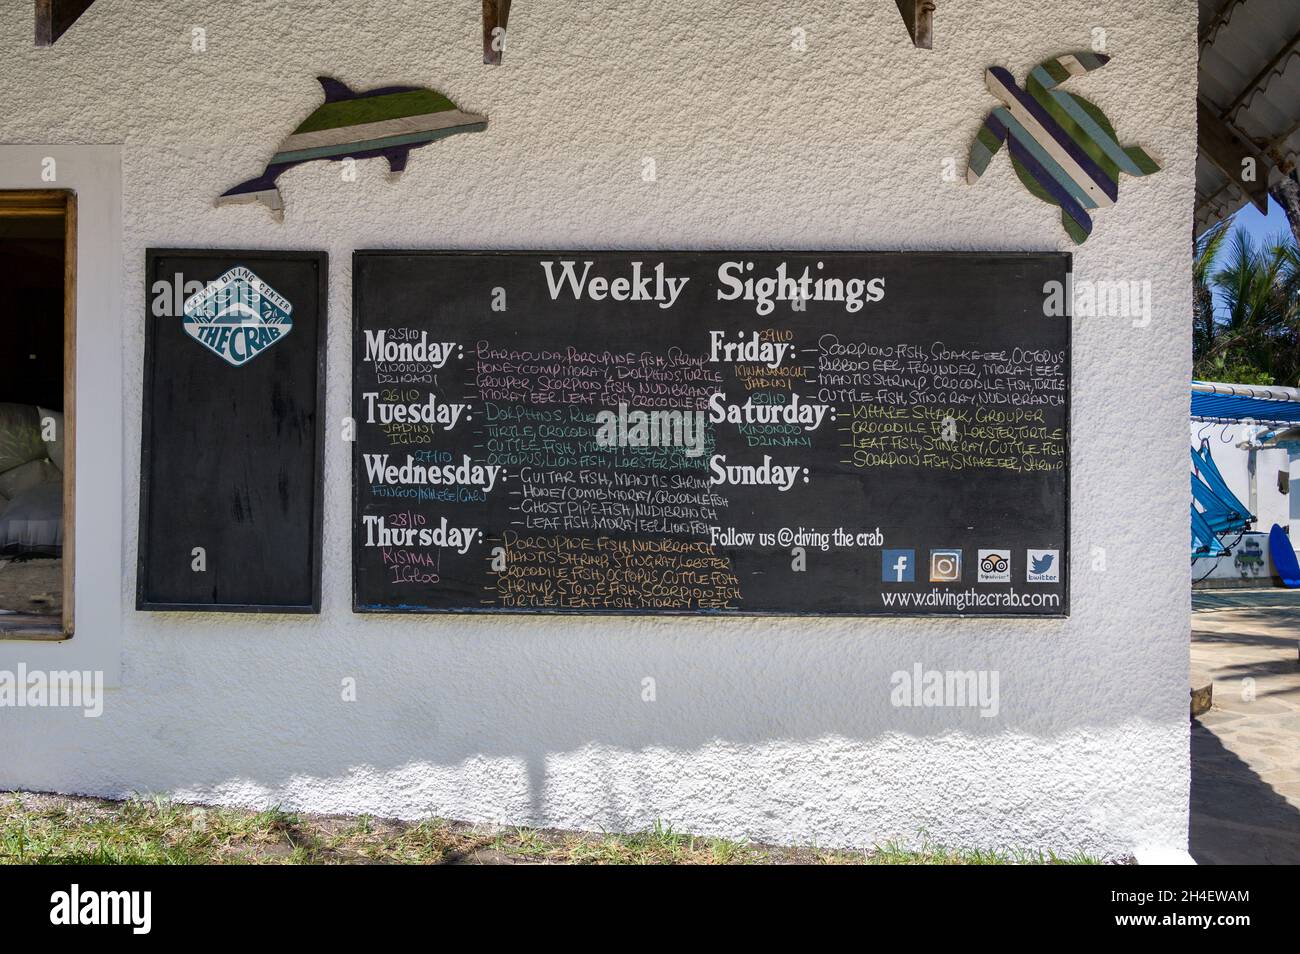 Weekly sightings black chalk board with various fish seen during the week, Diani, Kenya Stock Photo